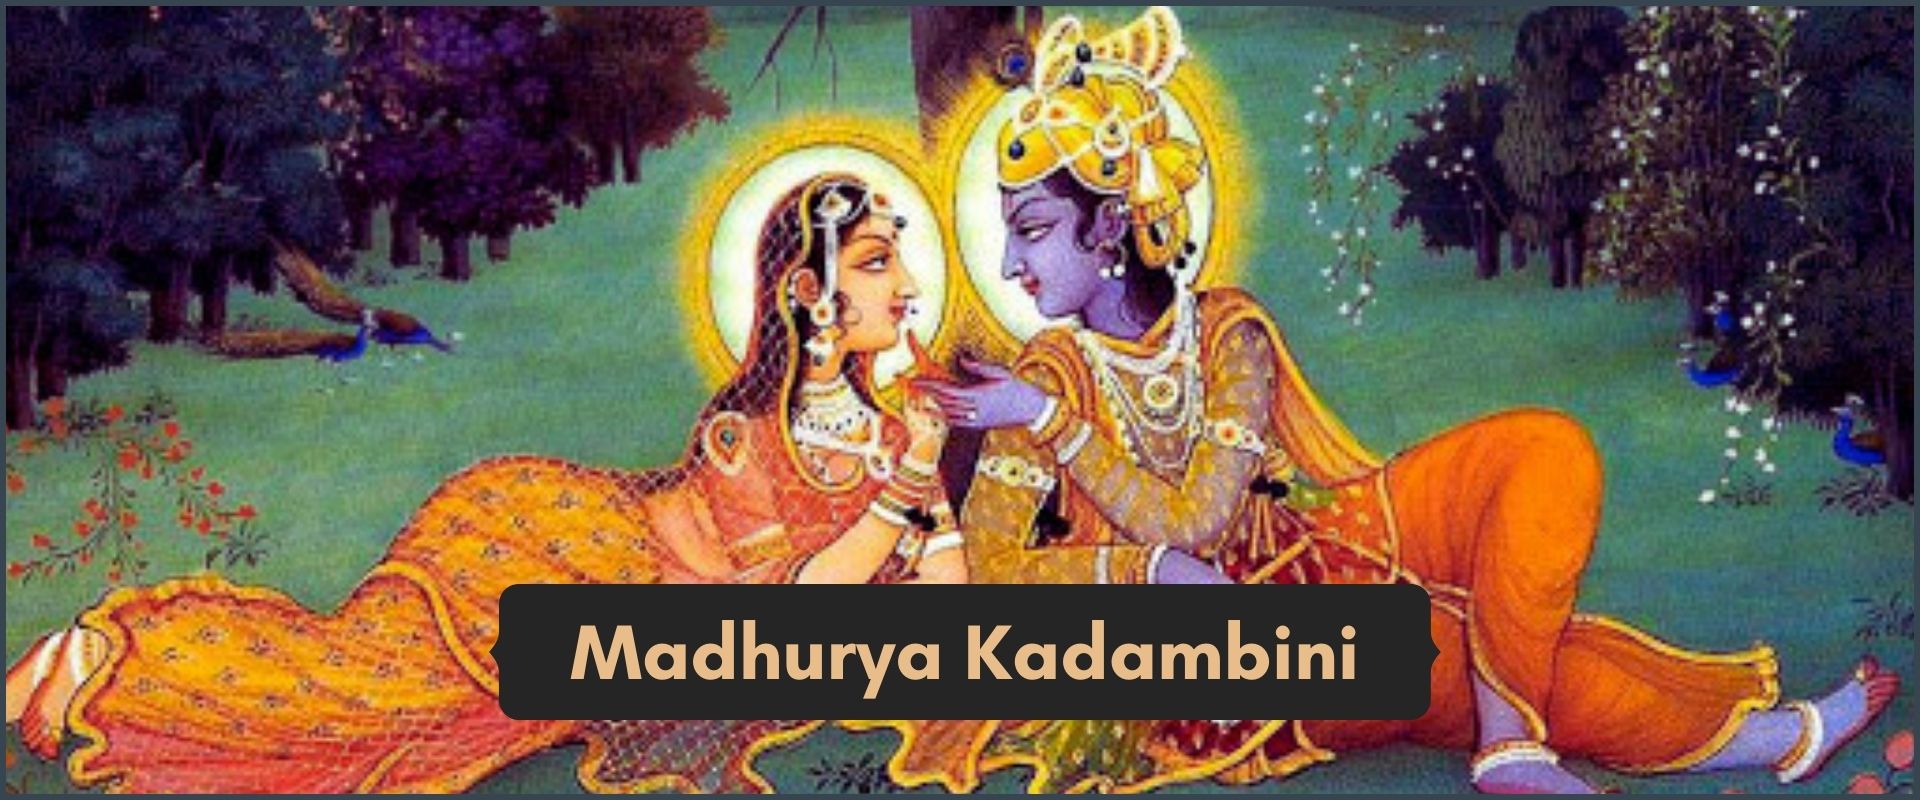 Madhurya Kadambini